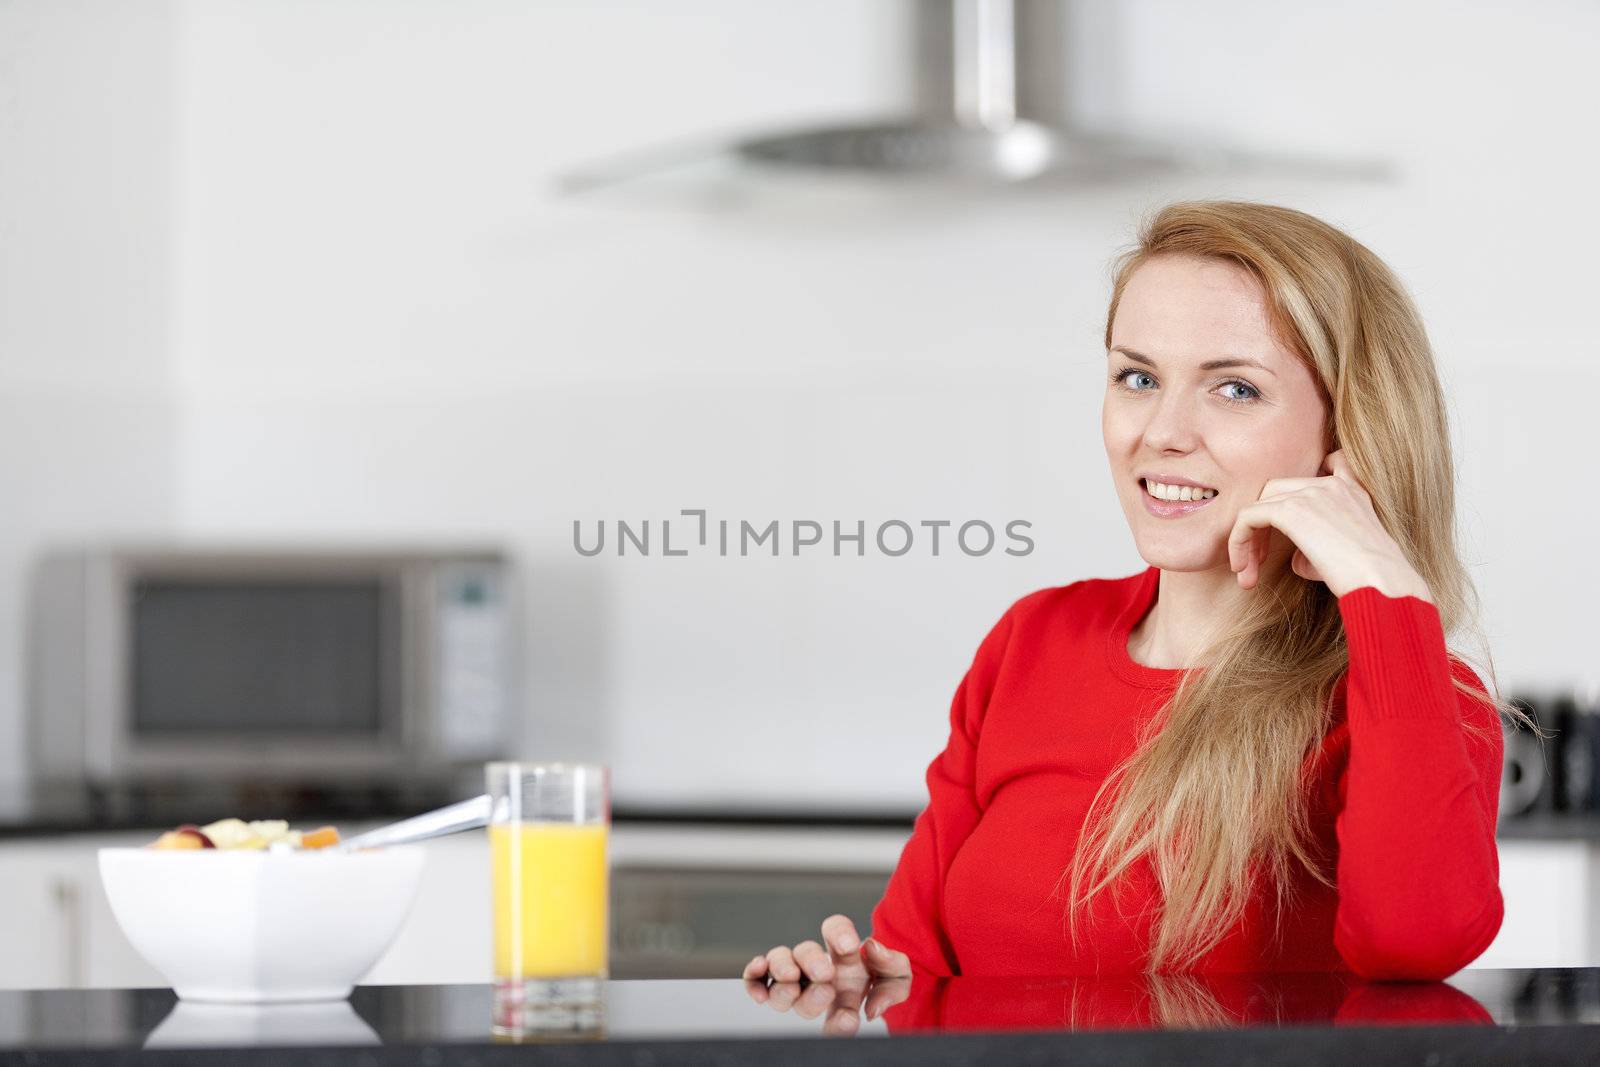 Young woman enjoying breakfast by studiofi